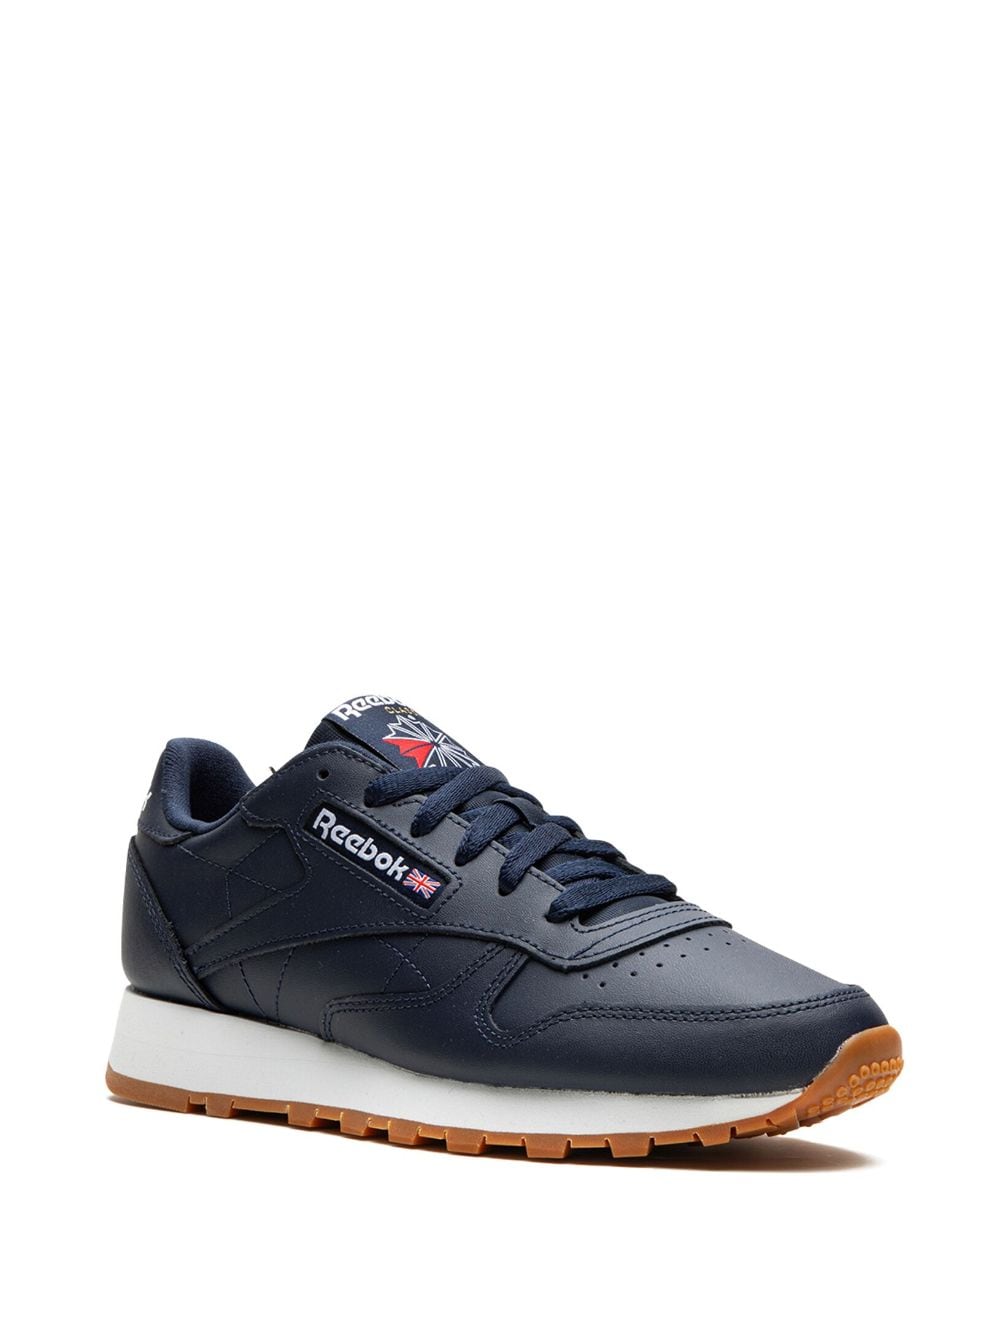 Reebok Classic Leather Sneakers - Farfetch